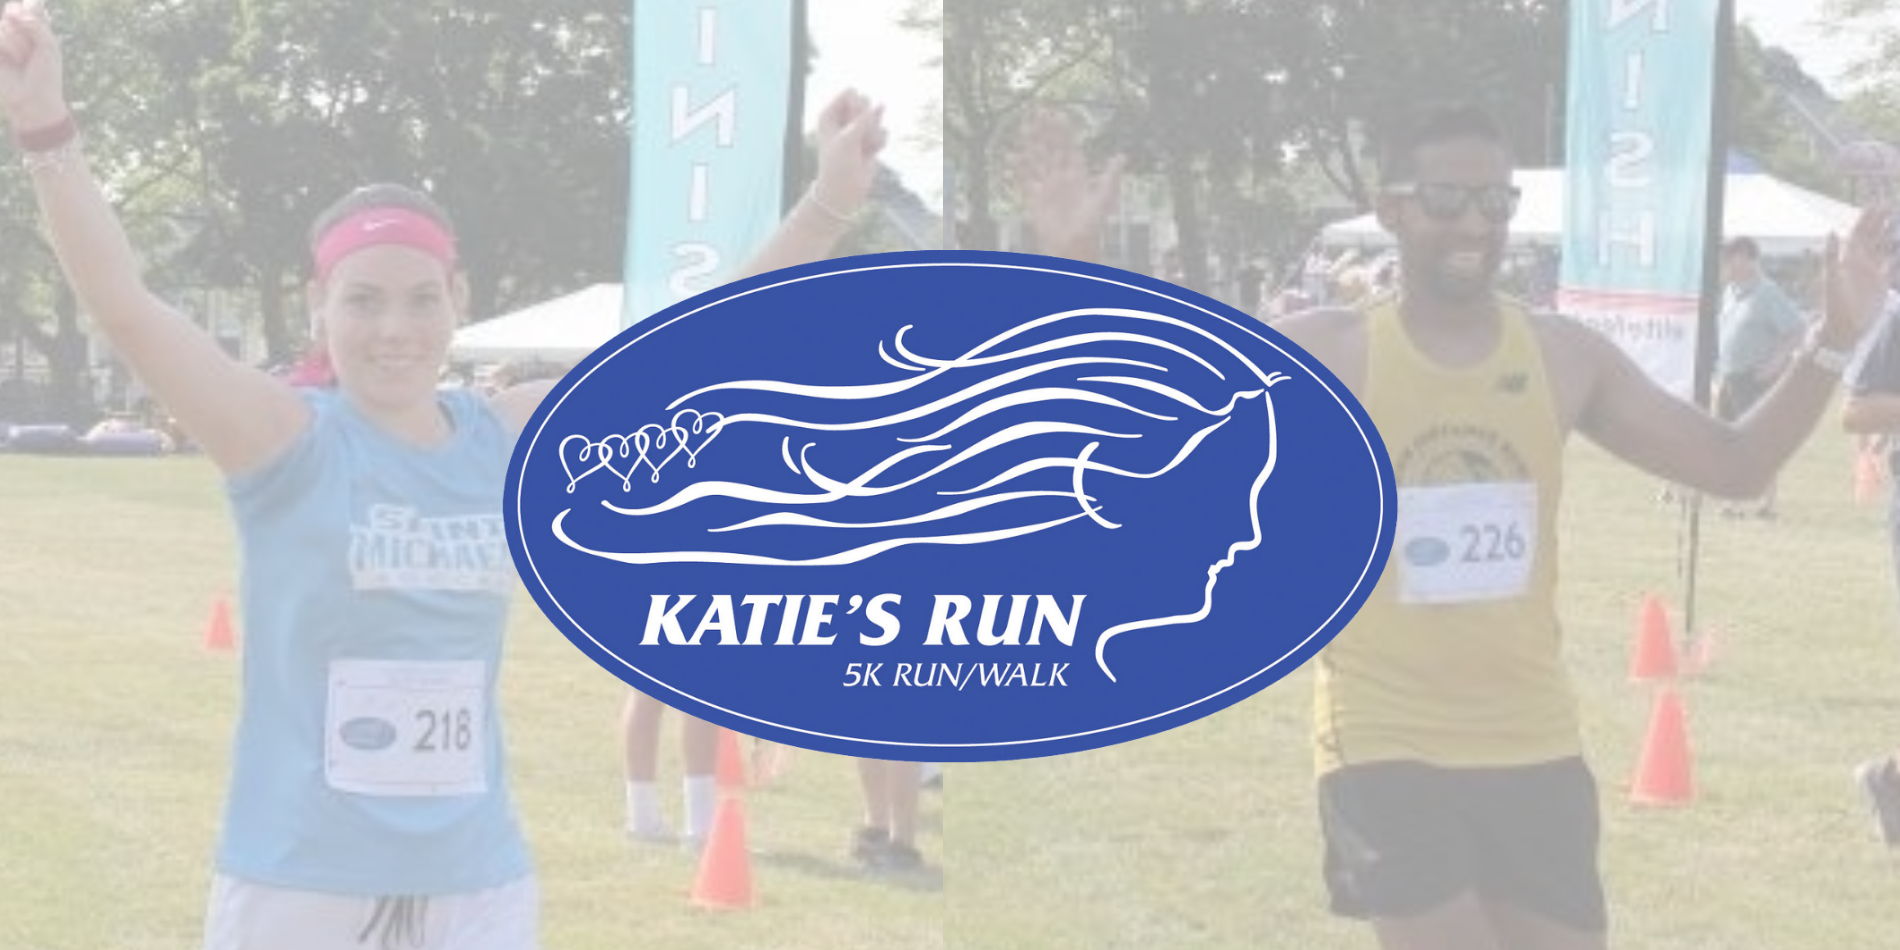 Katie's Run 5K | 2mi Fun Run/Walk | Children's Fun Run promotional image